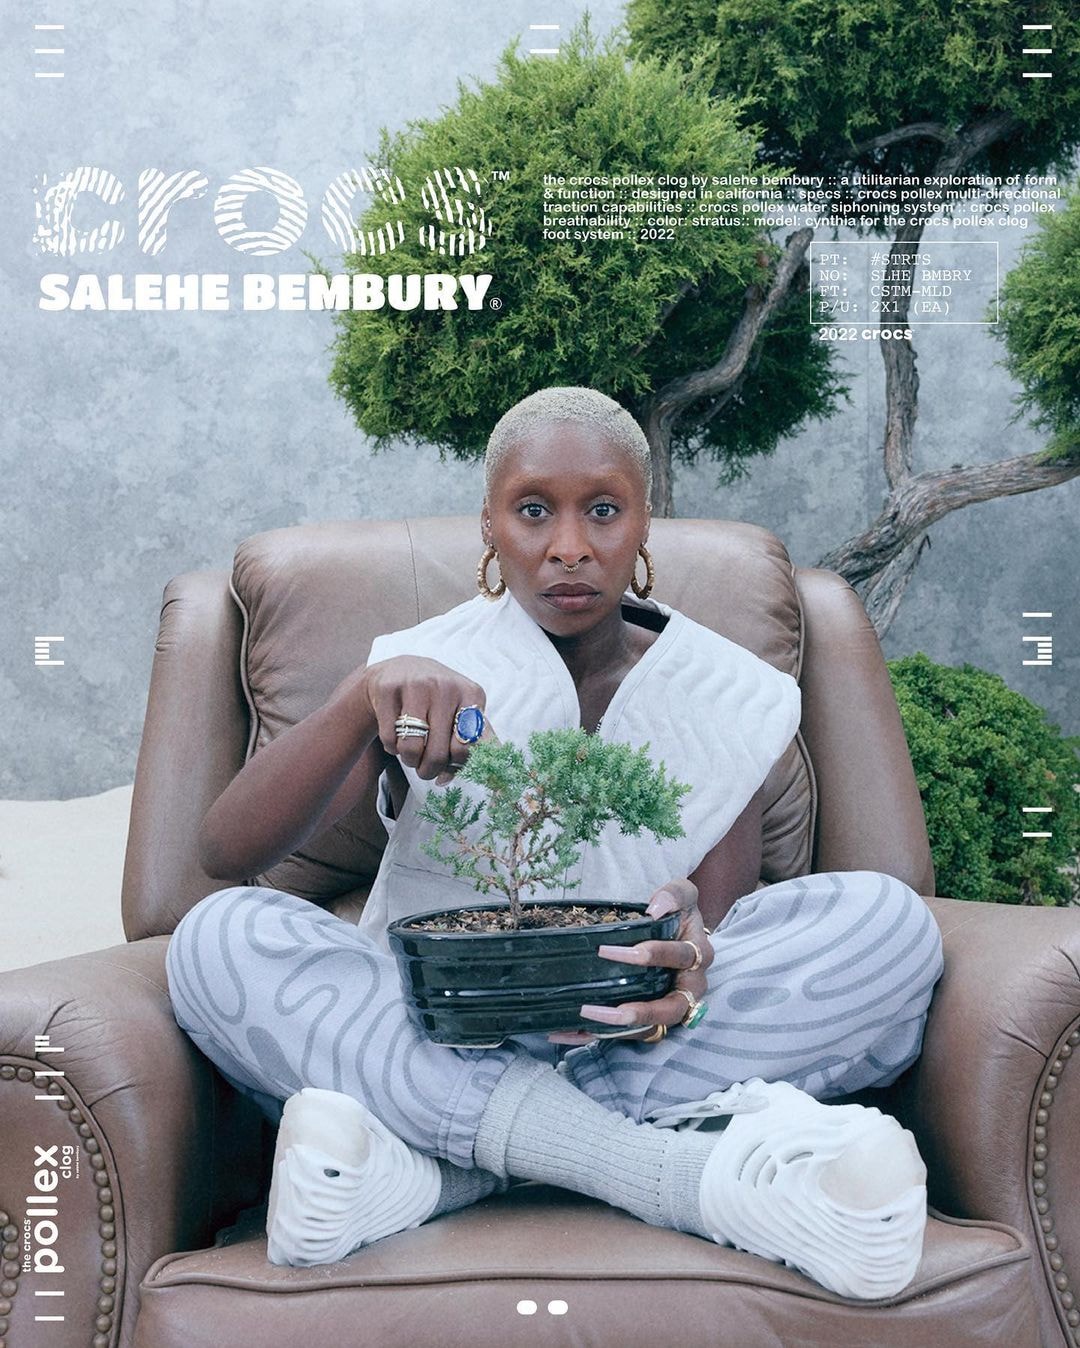 Salehe Bembury Crocs Pollex Clog all-white stratus campaign collaboration Cynthia Erivo